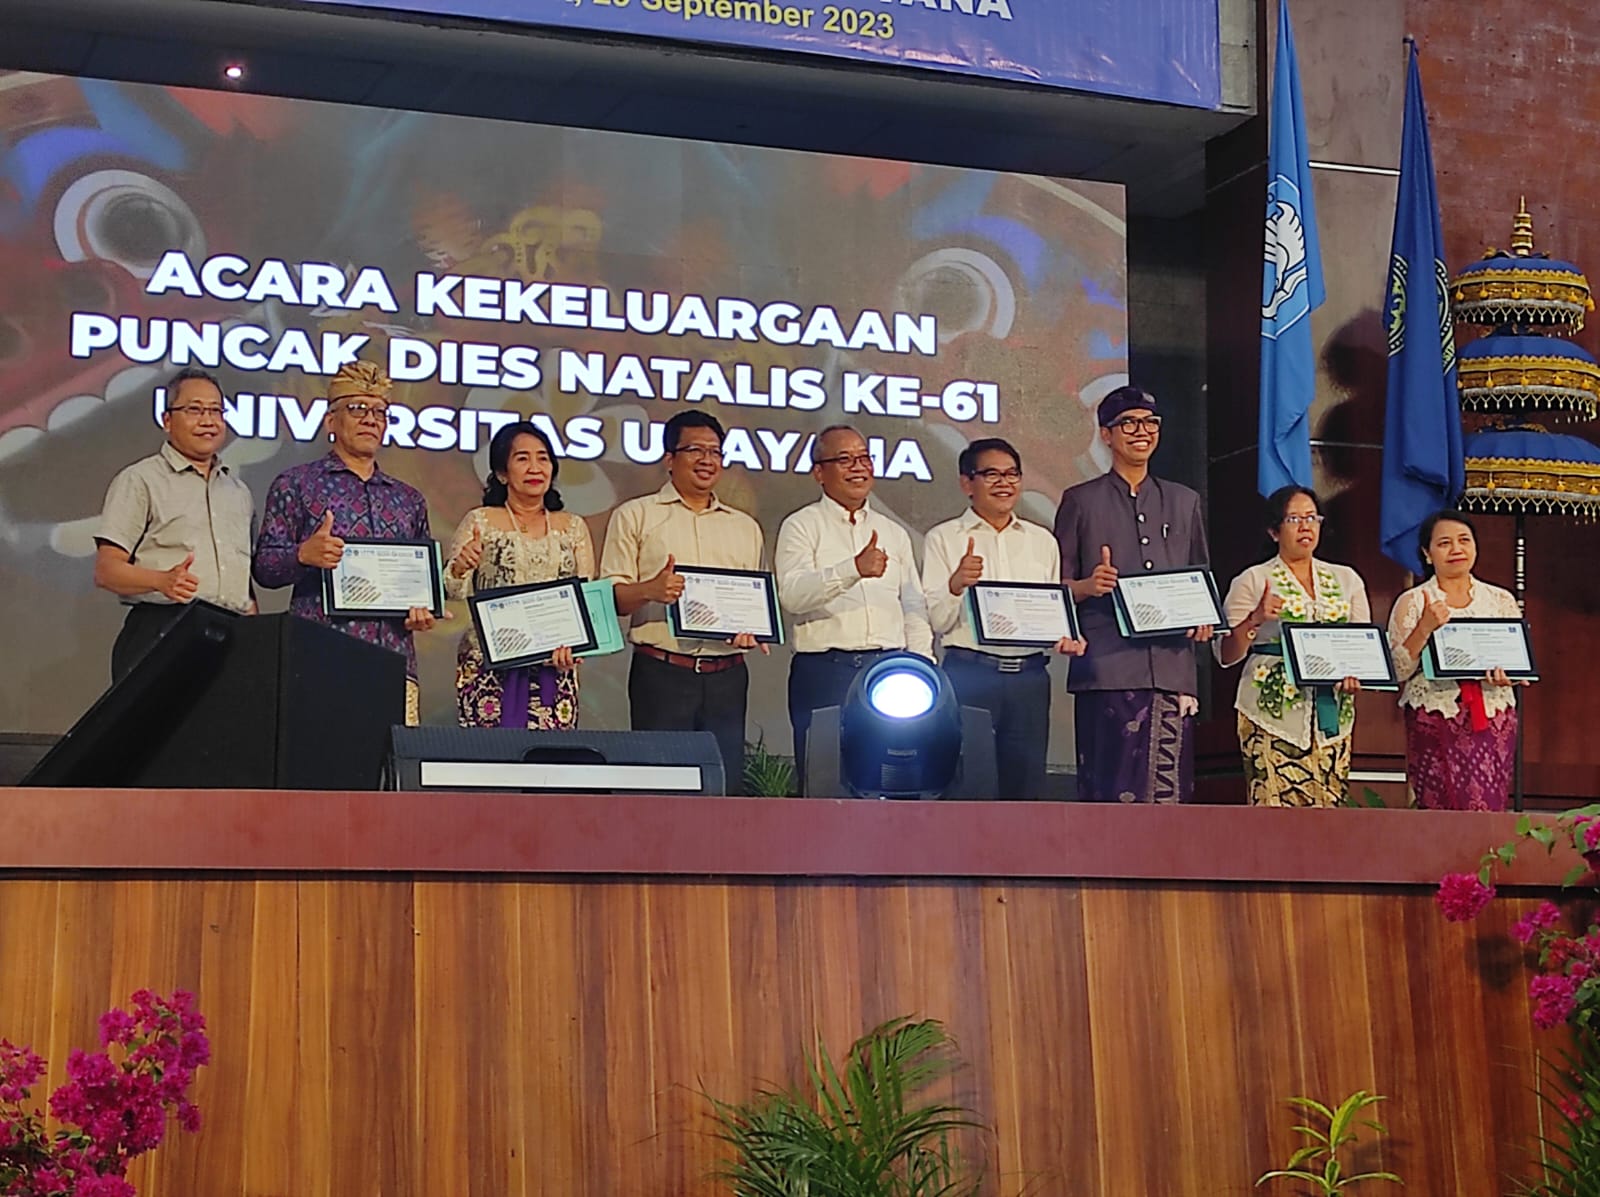 Luh Putu Ida Harini, S.Si, M.Sc won Udayana University TOP 10 best researcher & Community Service worker of 2023